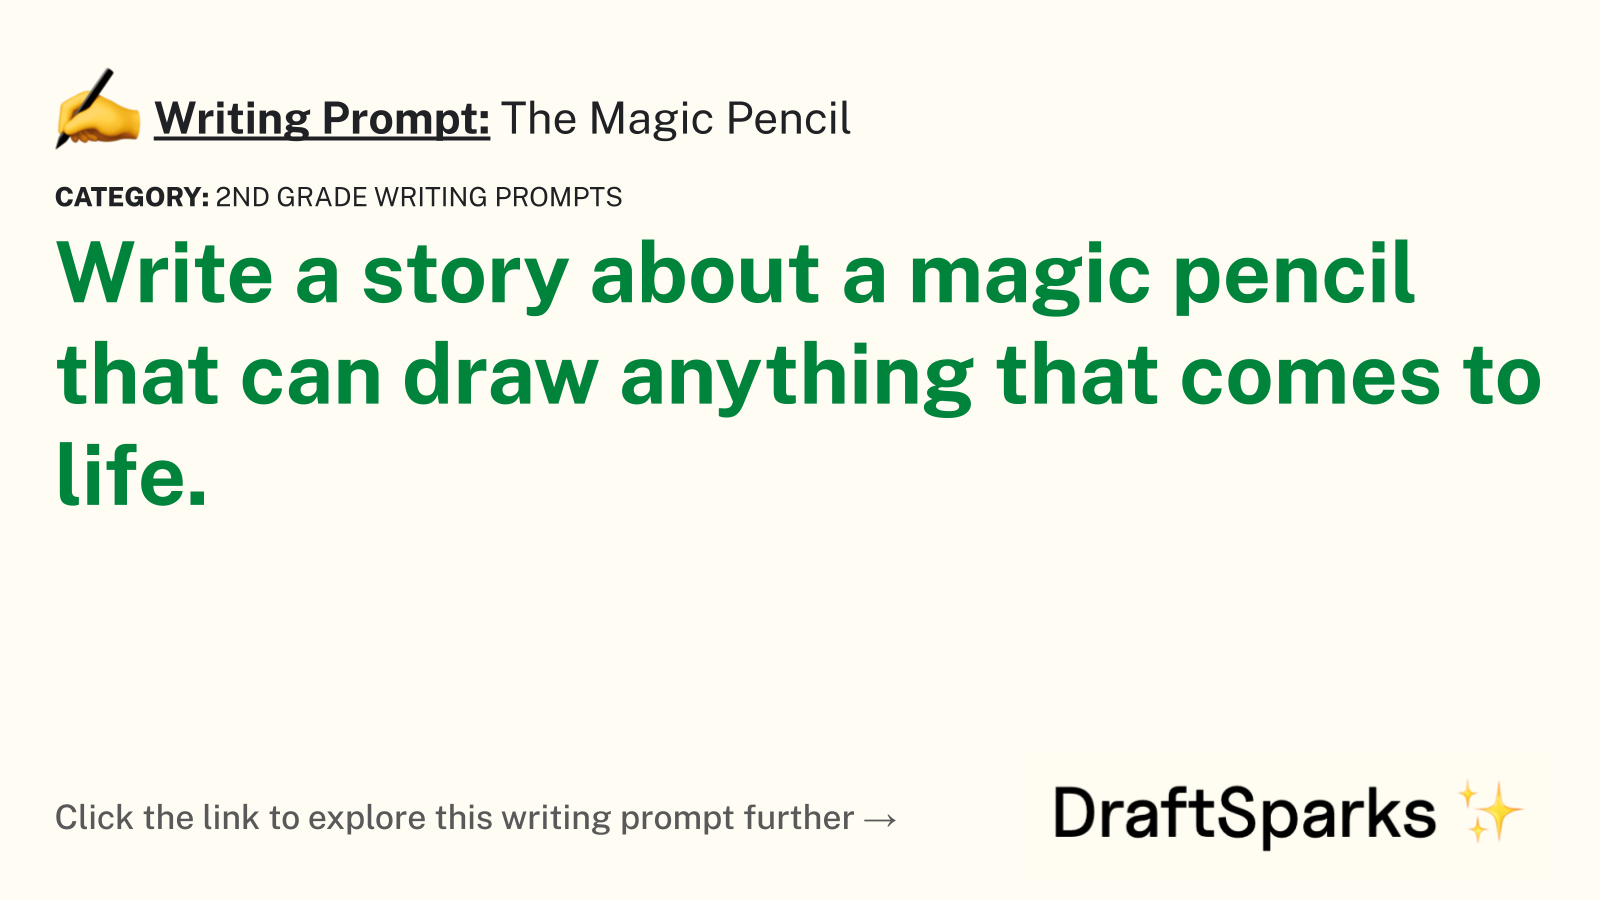 The Magic Pencil